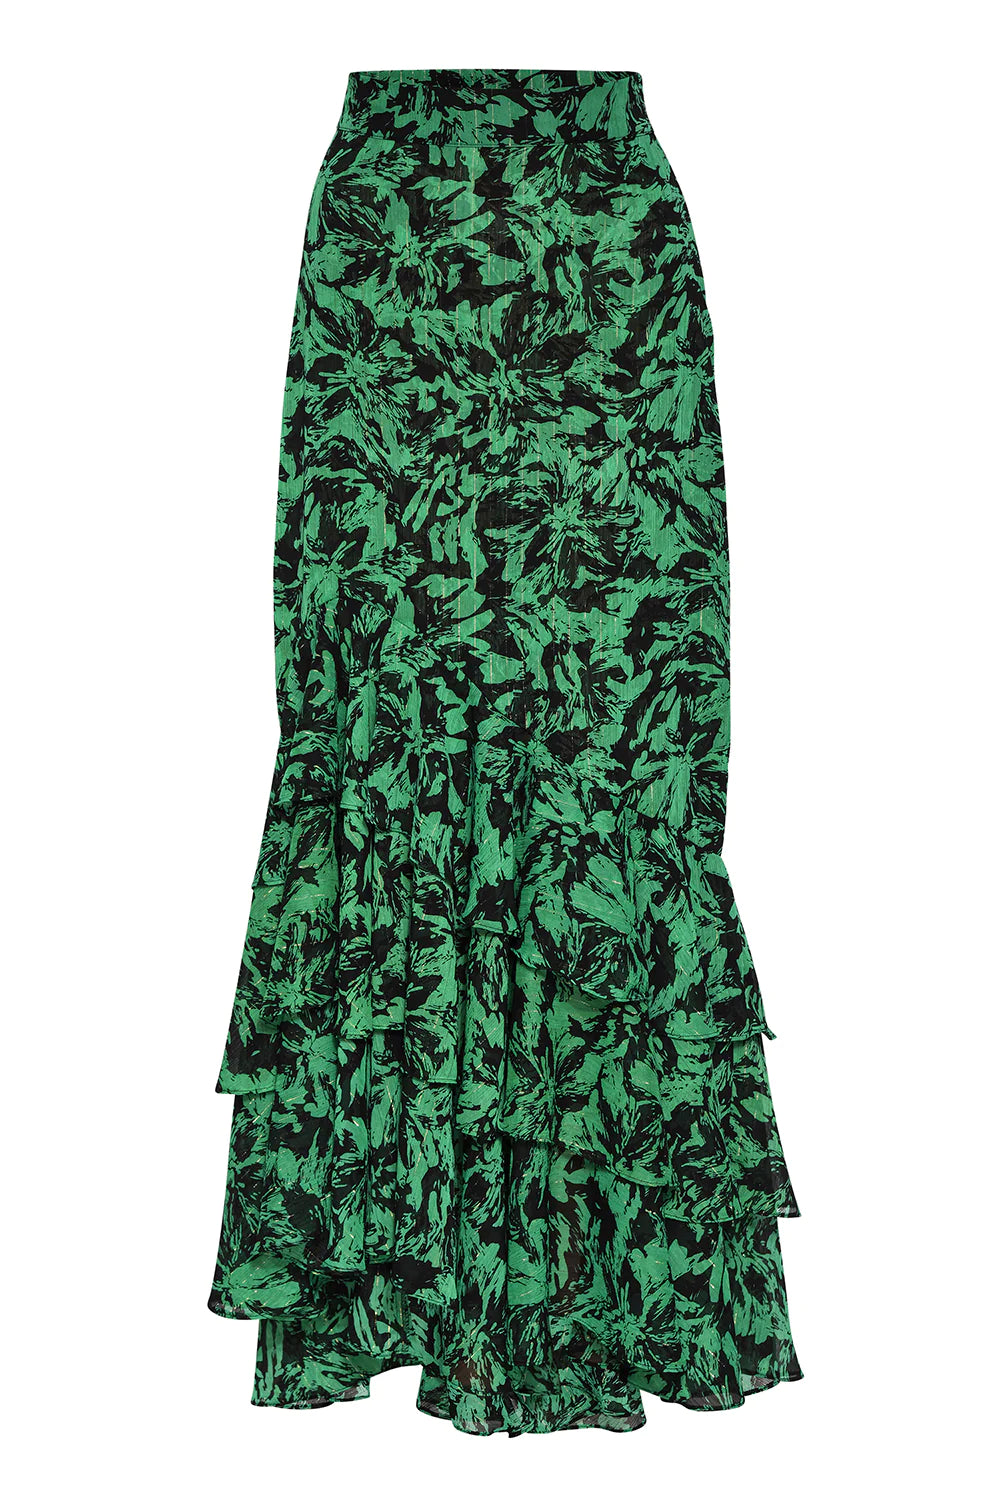 Veronique skirt - emerald abstract